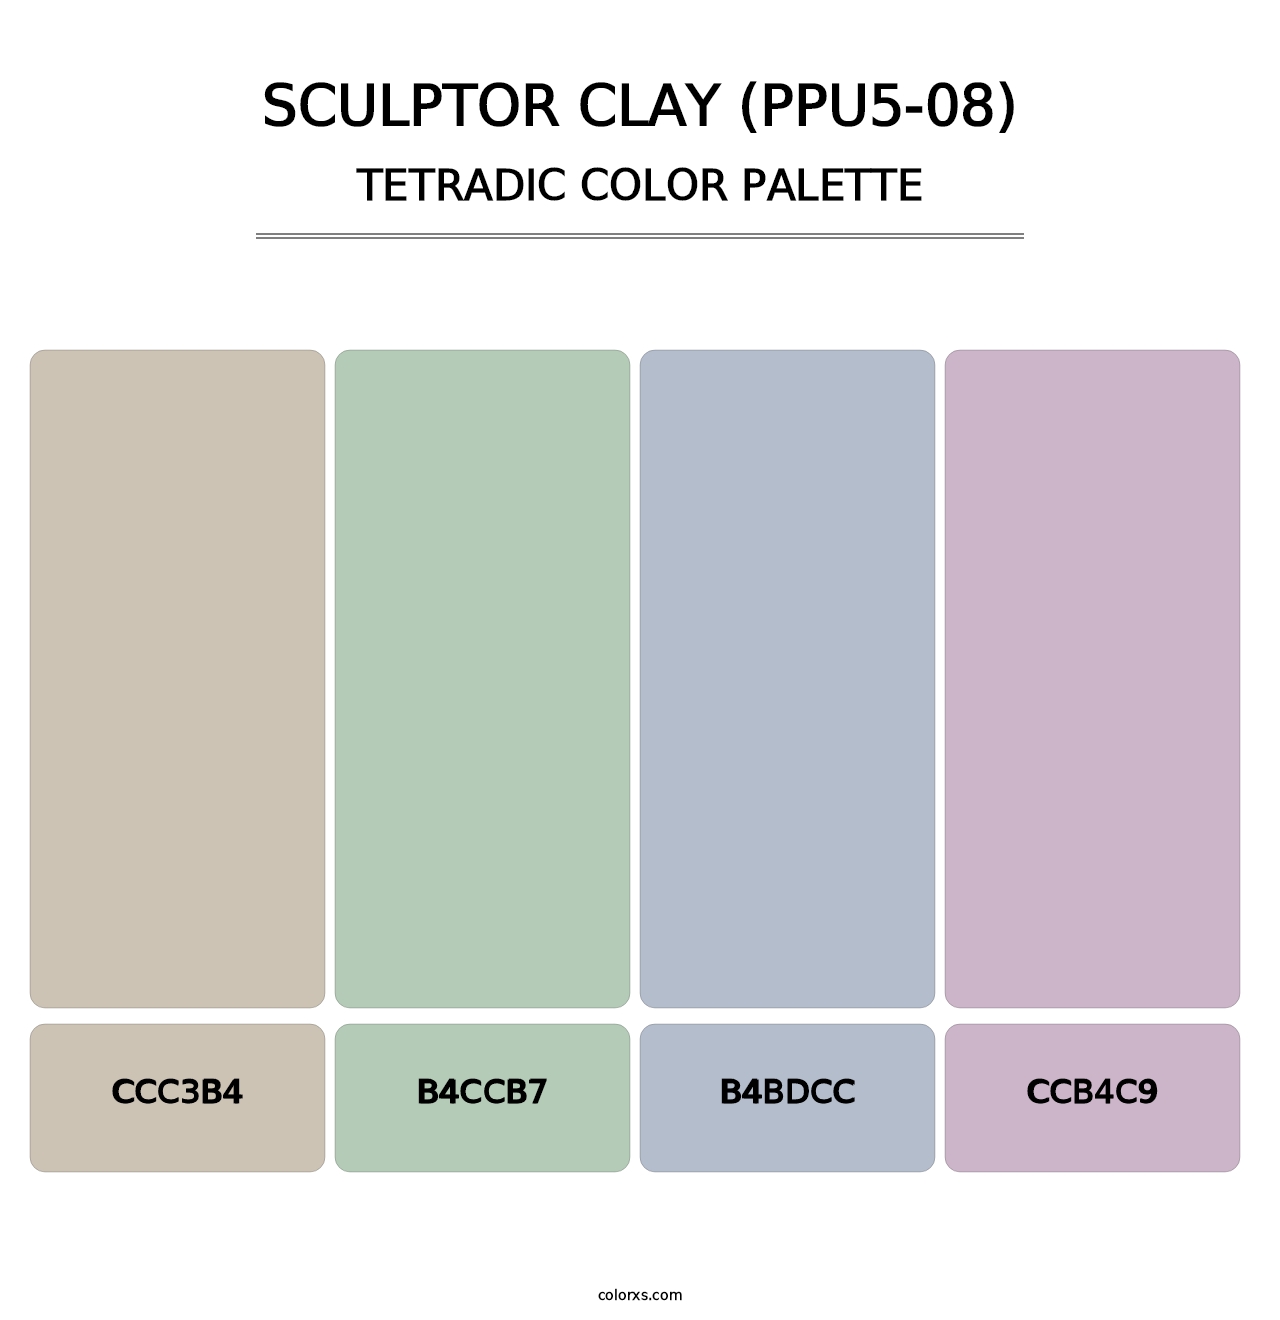 Sculptor Clay (PPU5-08) - Tetradic Color Palette